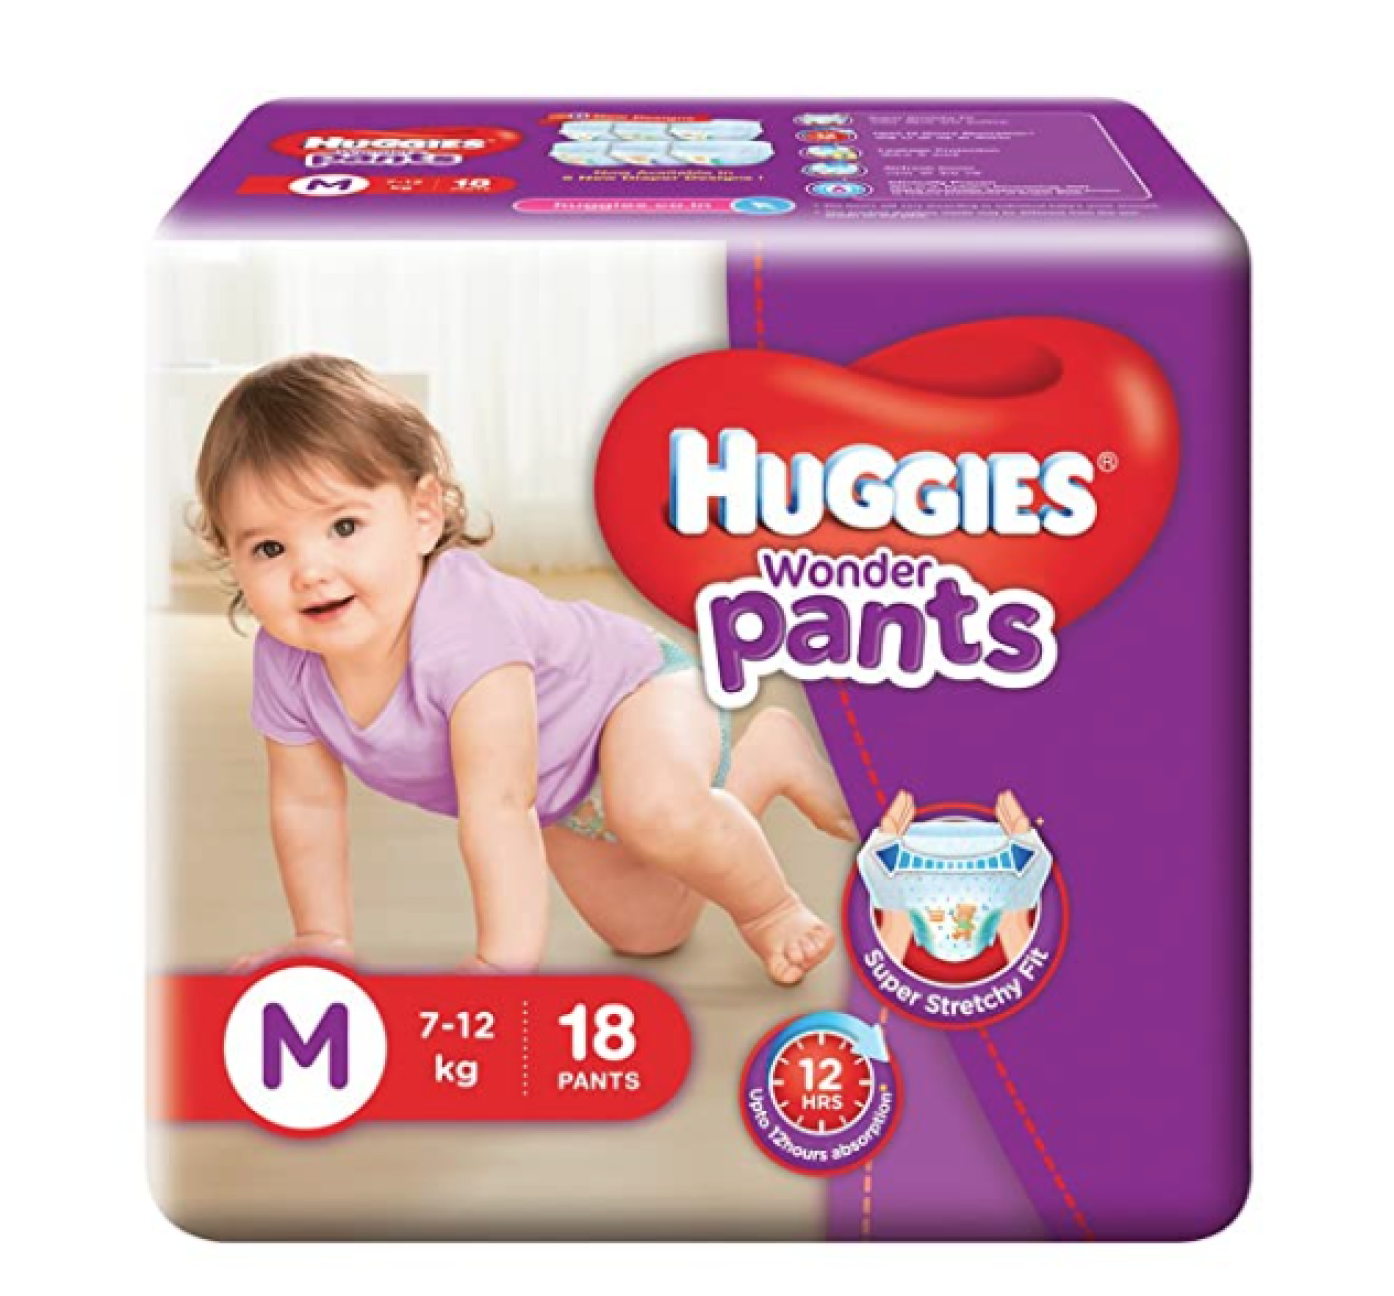 Huggies Wonder Pants Diaper (M) + Huggies Nature Care Baby Wipes Combo  Price - Buy Online at Best Price in India